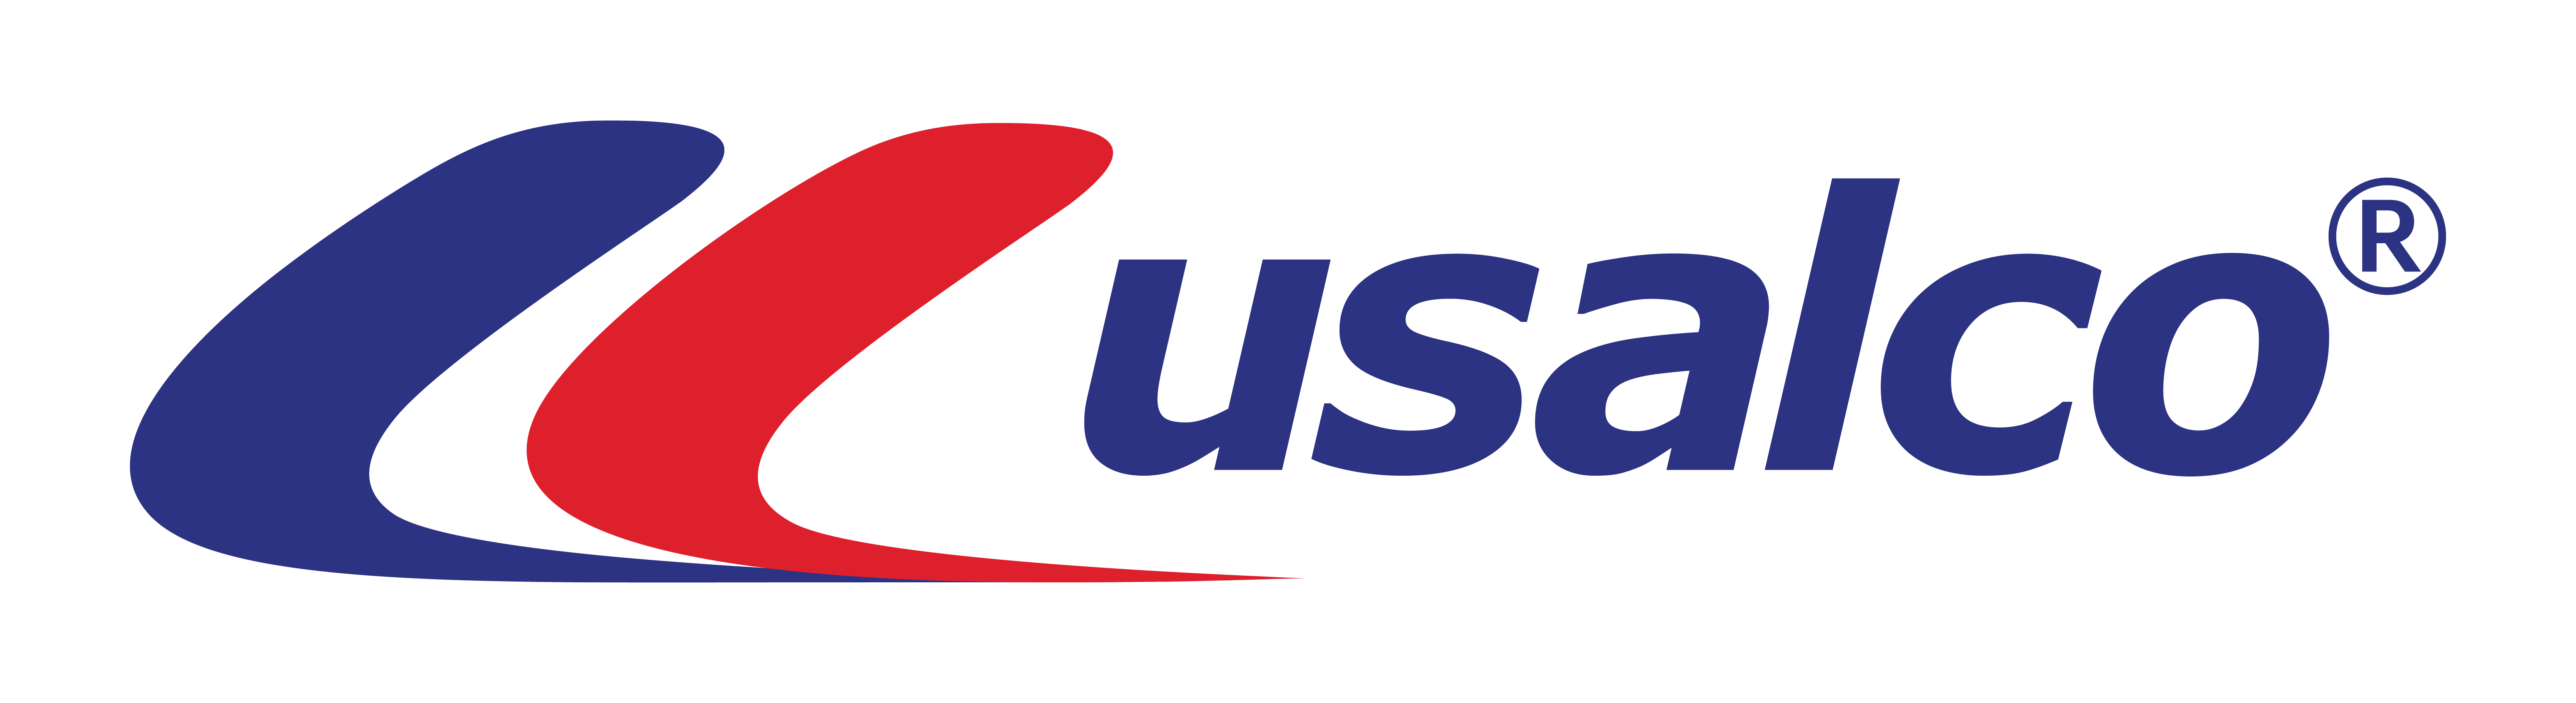 USALCO logo